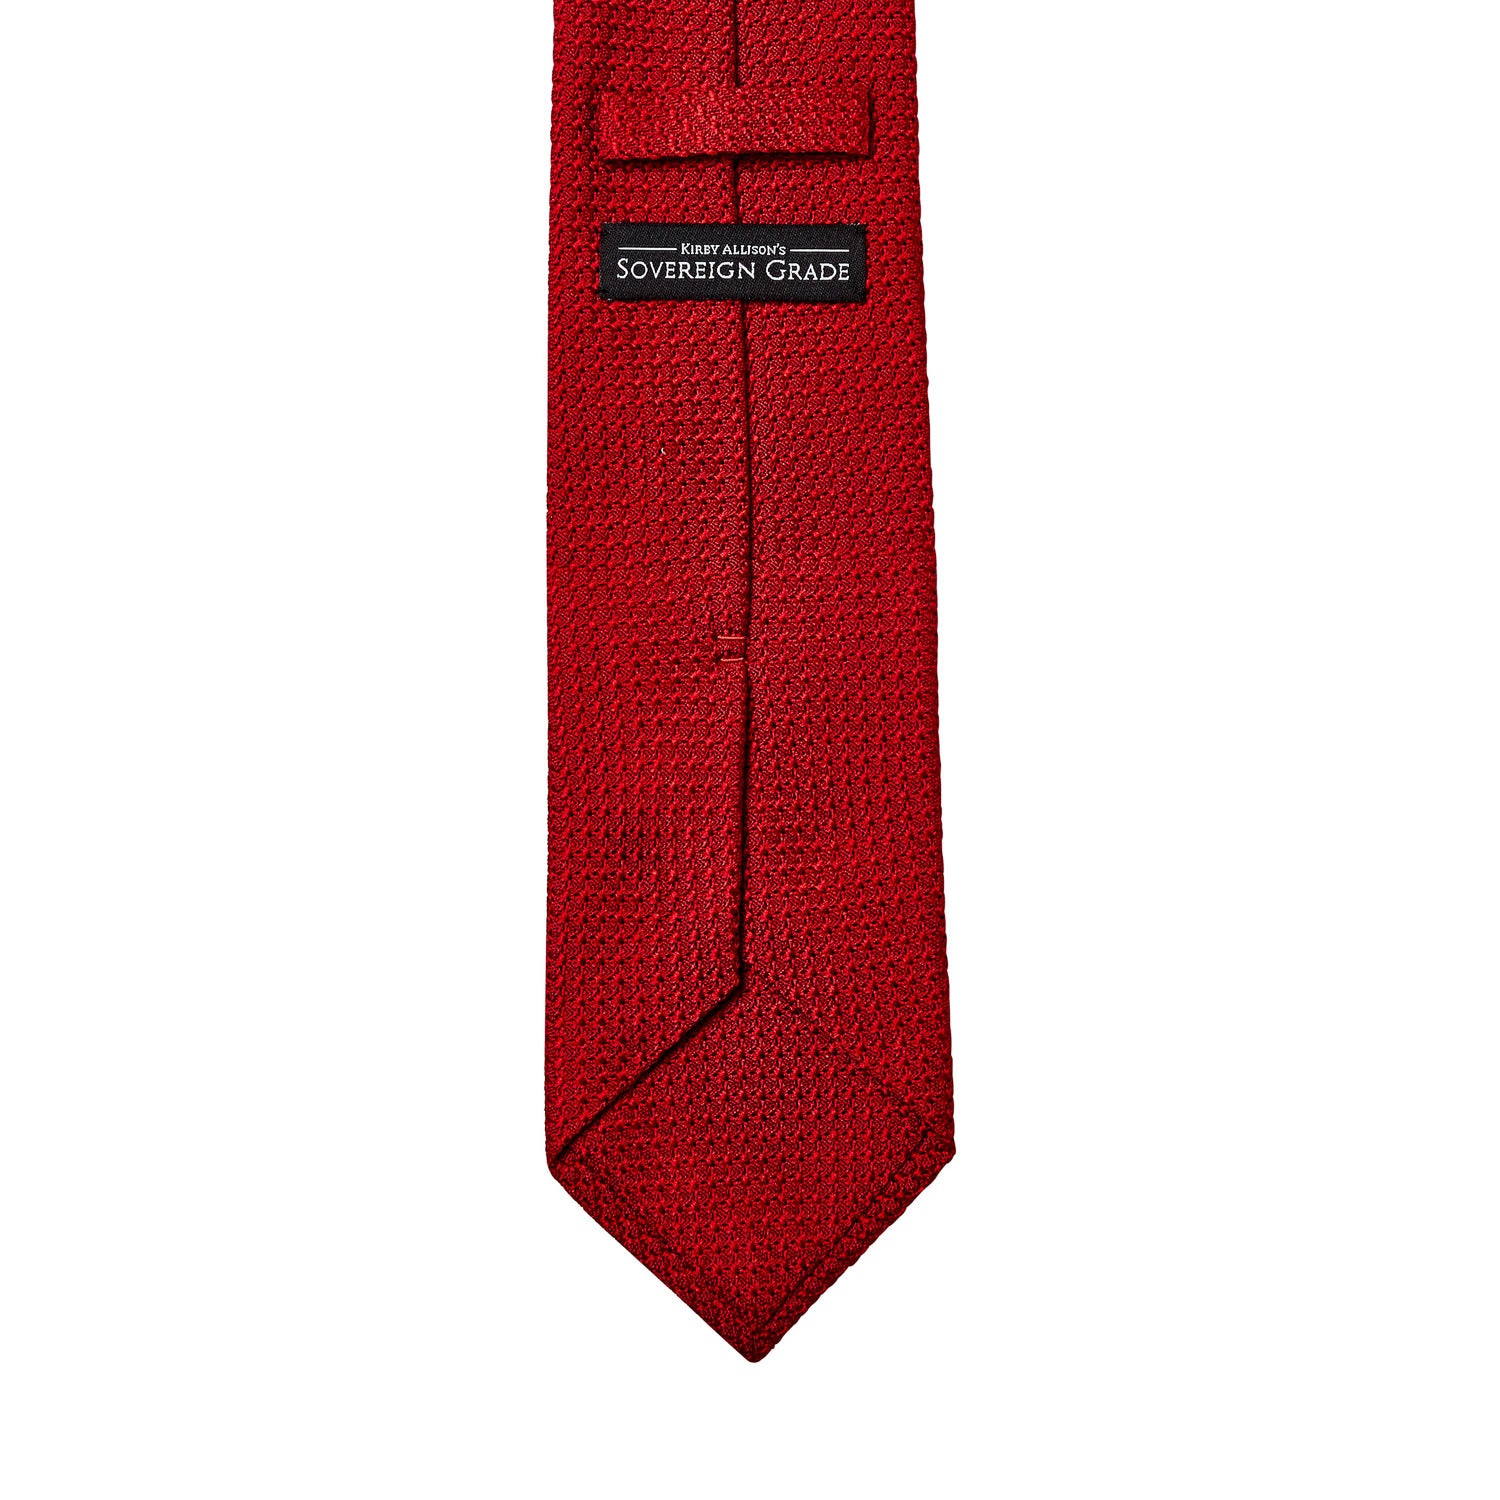 A Sovereign Grade Grenadine Grossa Red Tie on a white background. (Brand: KirbyAllison.com)